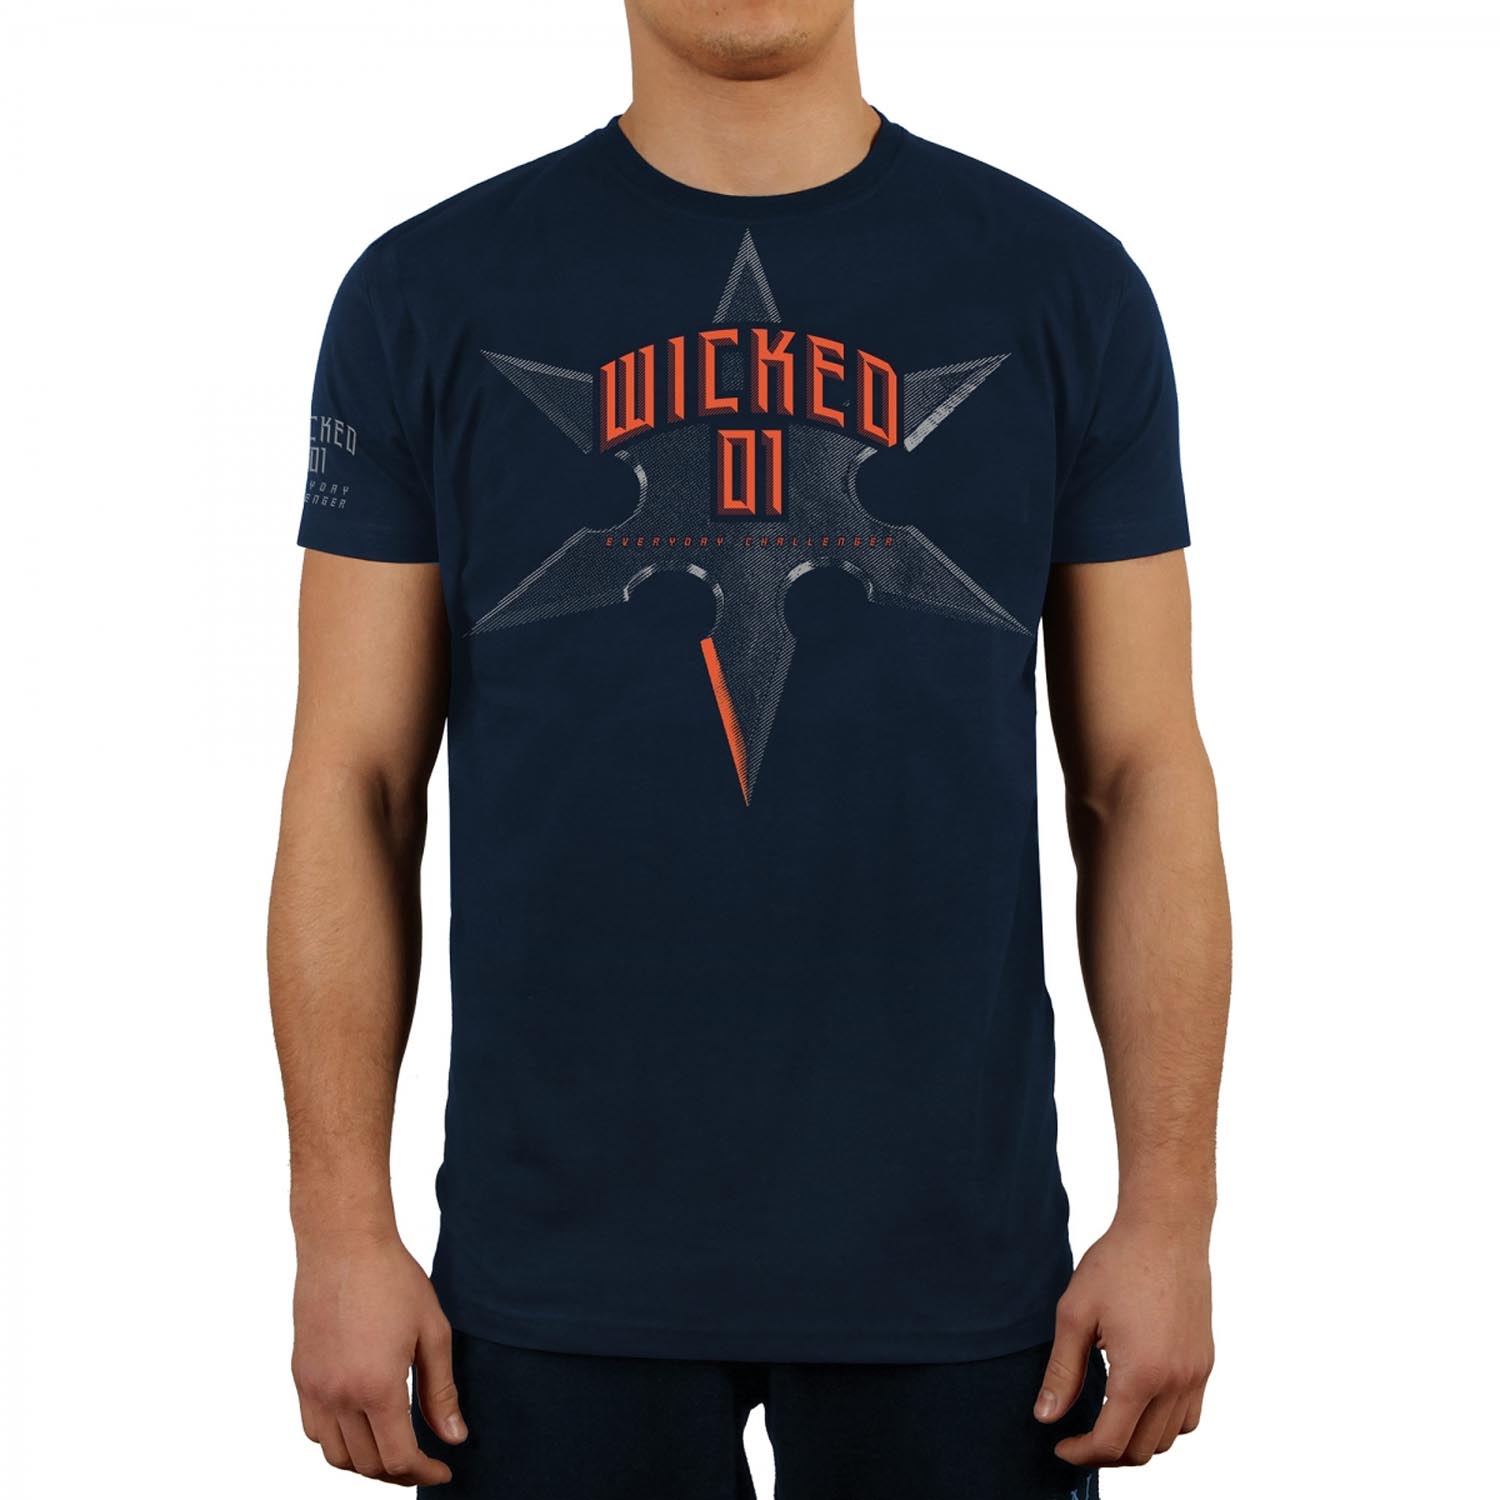 Wicked One T-Shirt, Shuriken, navy, XL